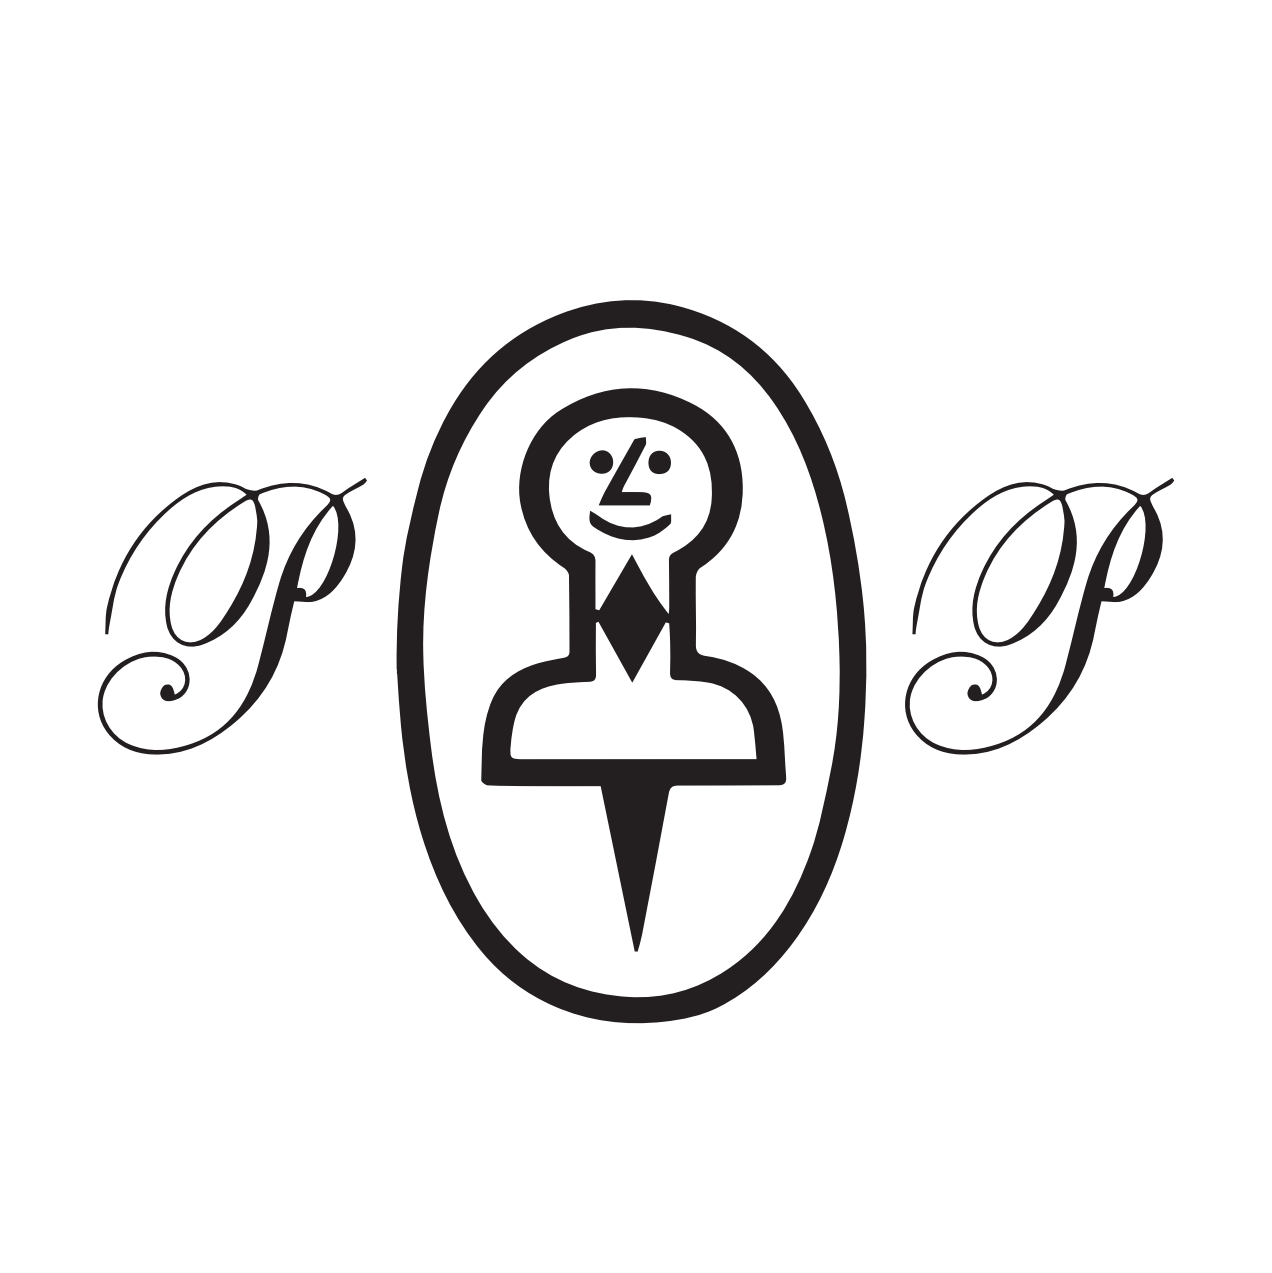 Pushpin Legendary T-Shirts『PP Pushpin Logo』-b004